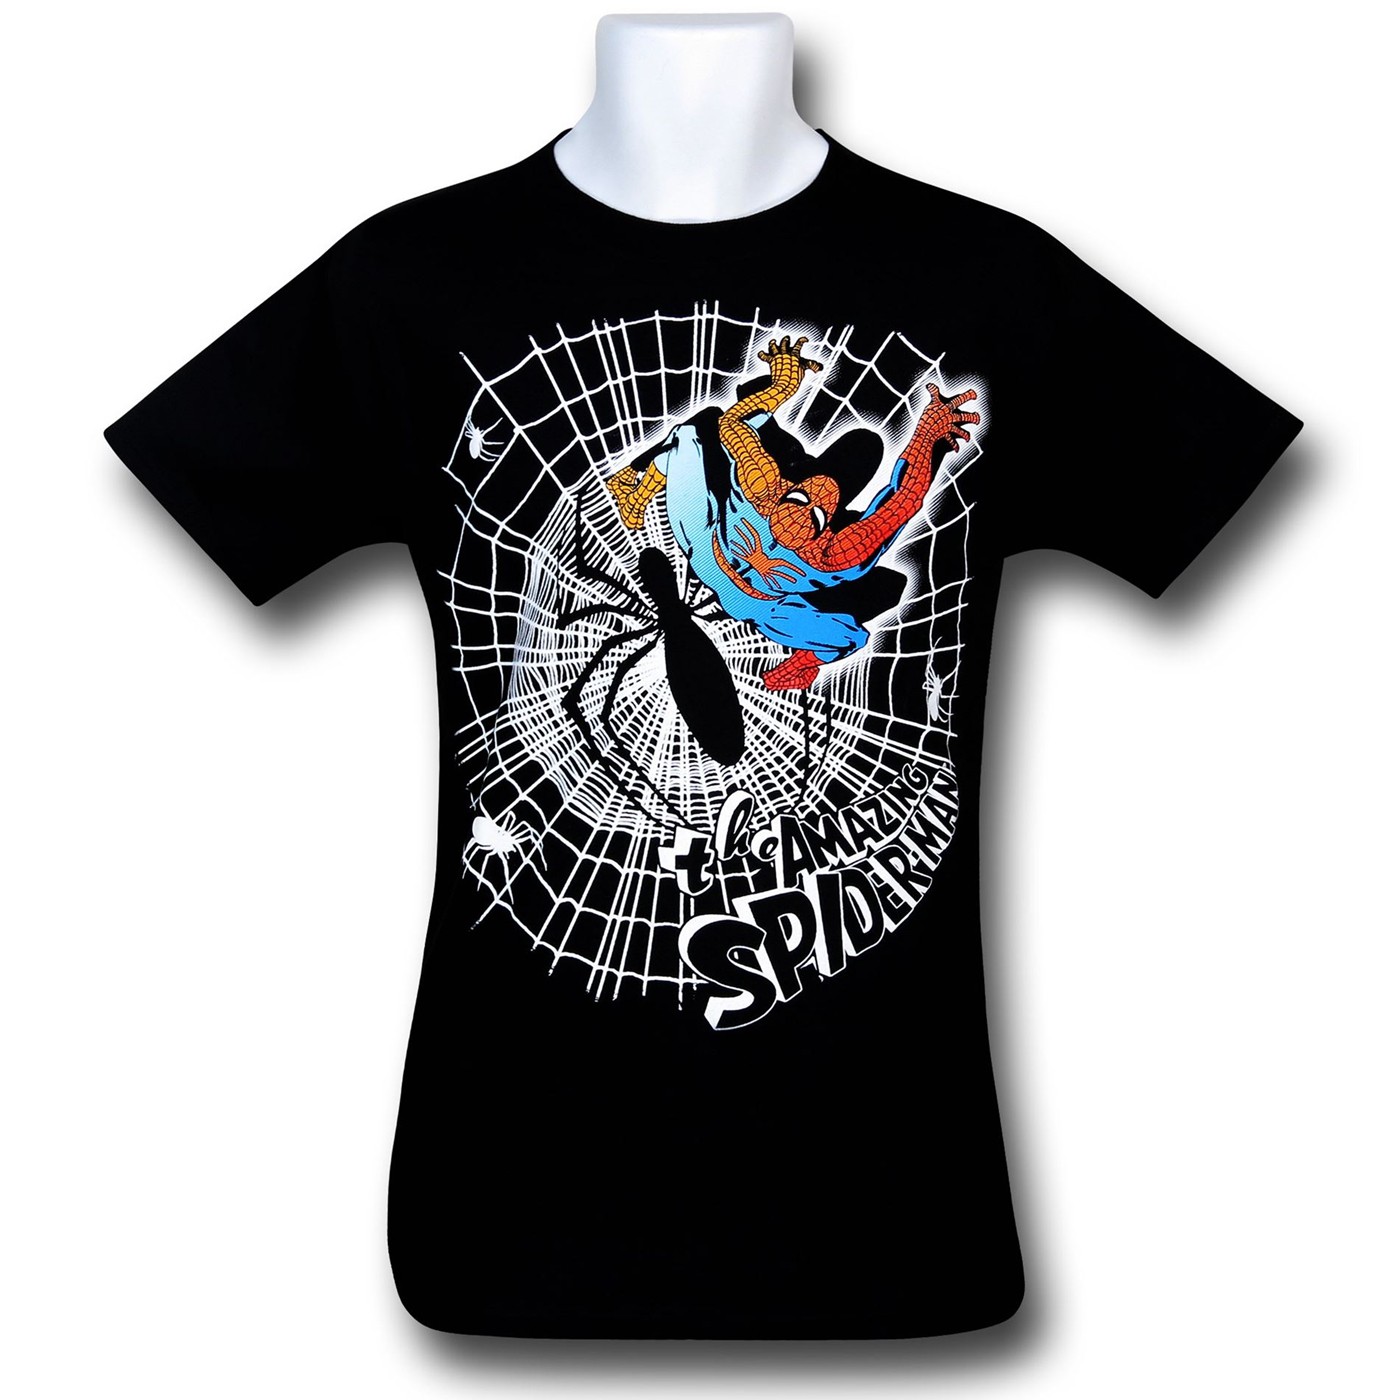 Spiderman Spider's Web Black T-Shirt